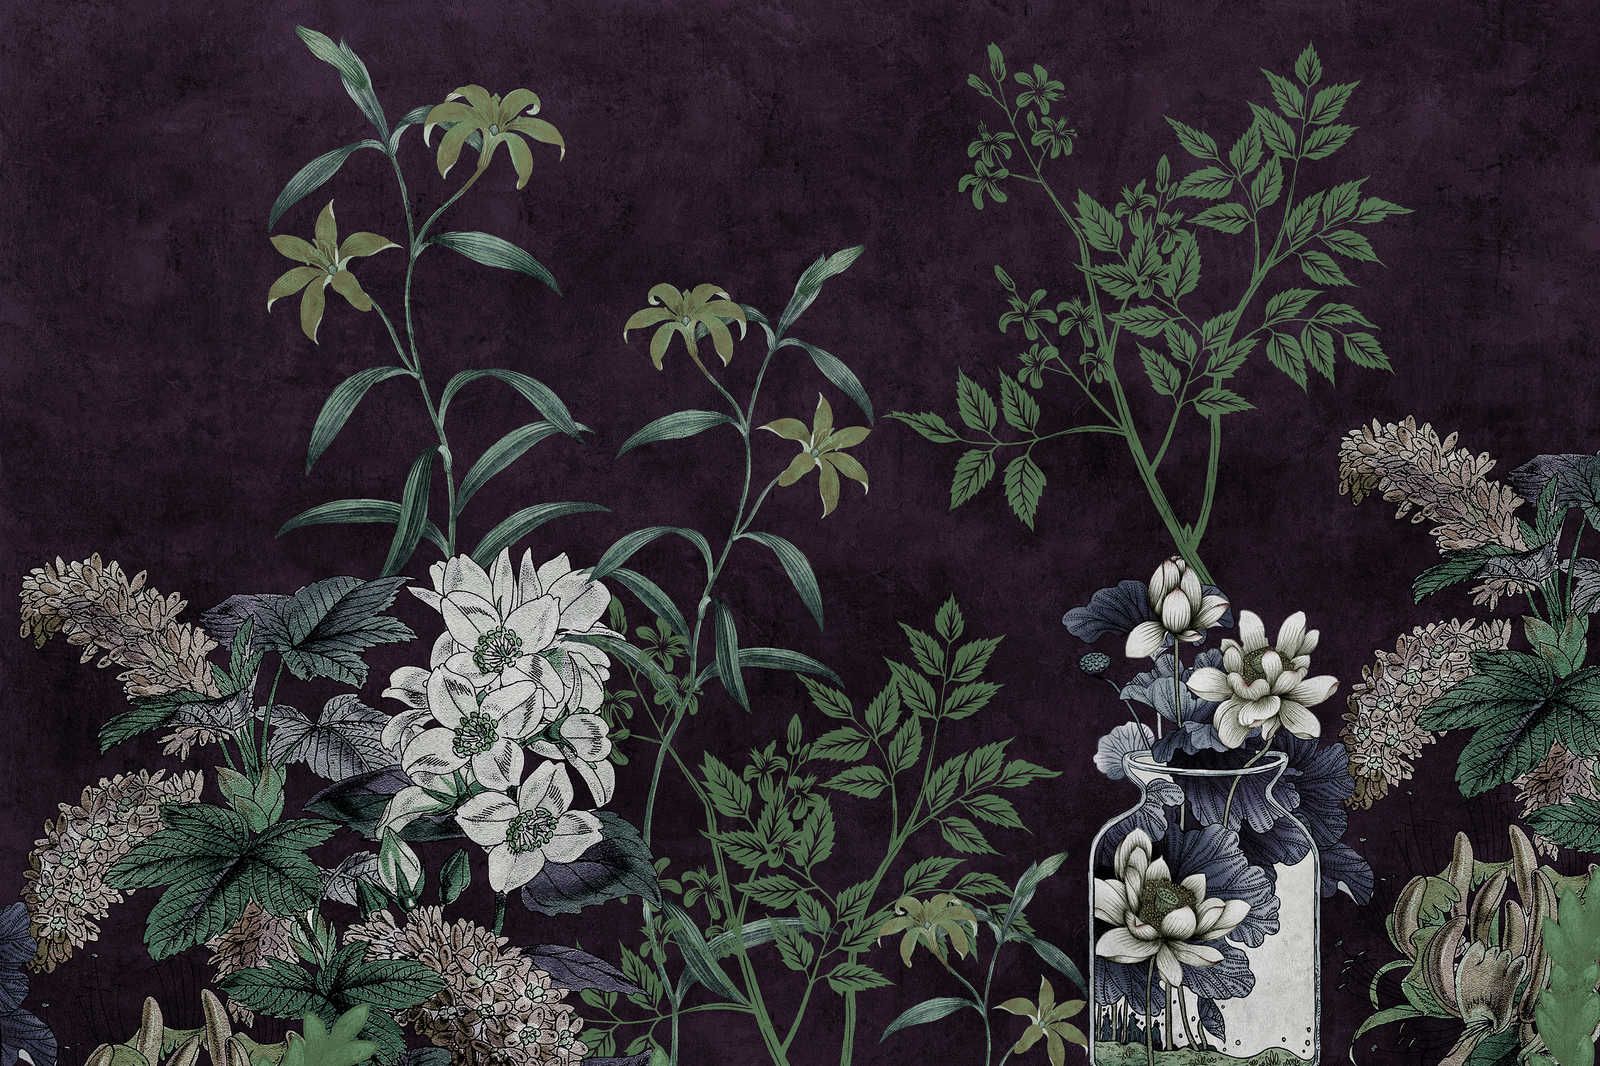             Camera oscura 1 - Pittura su tela nera con motivo botanico verde - 1,20 m x 0,80 m
        